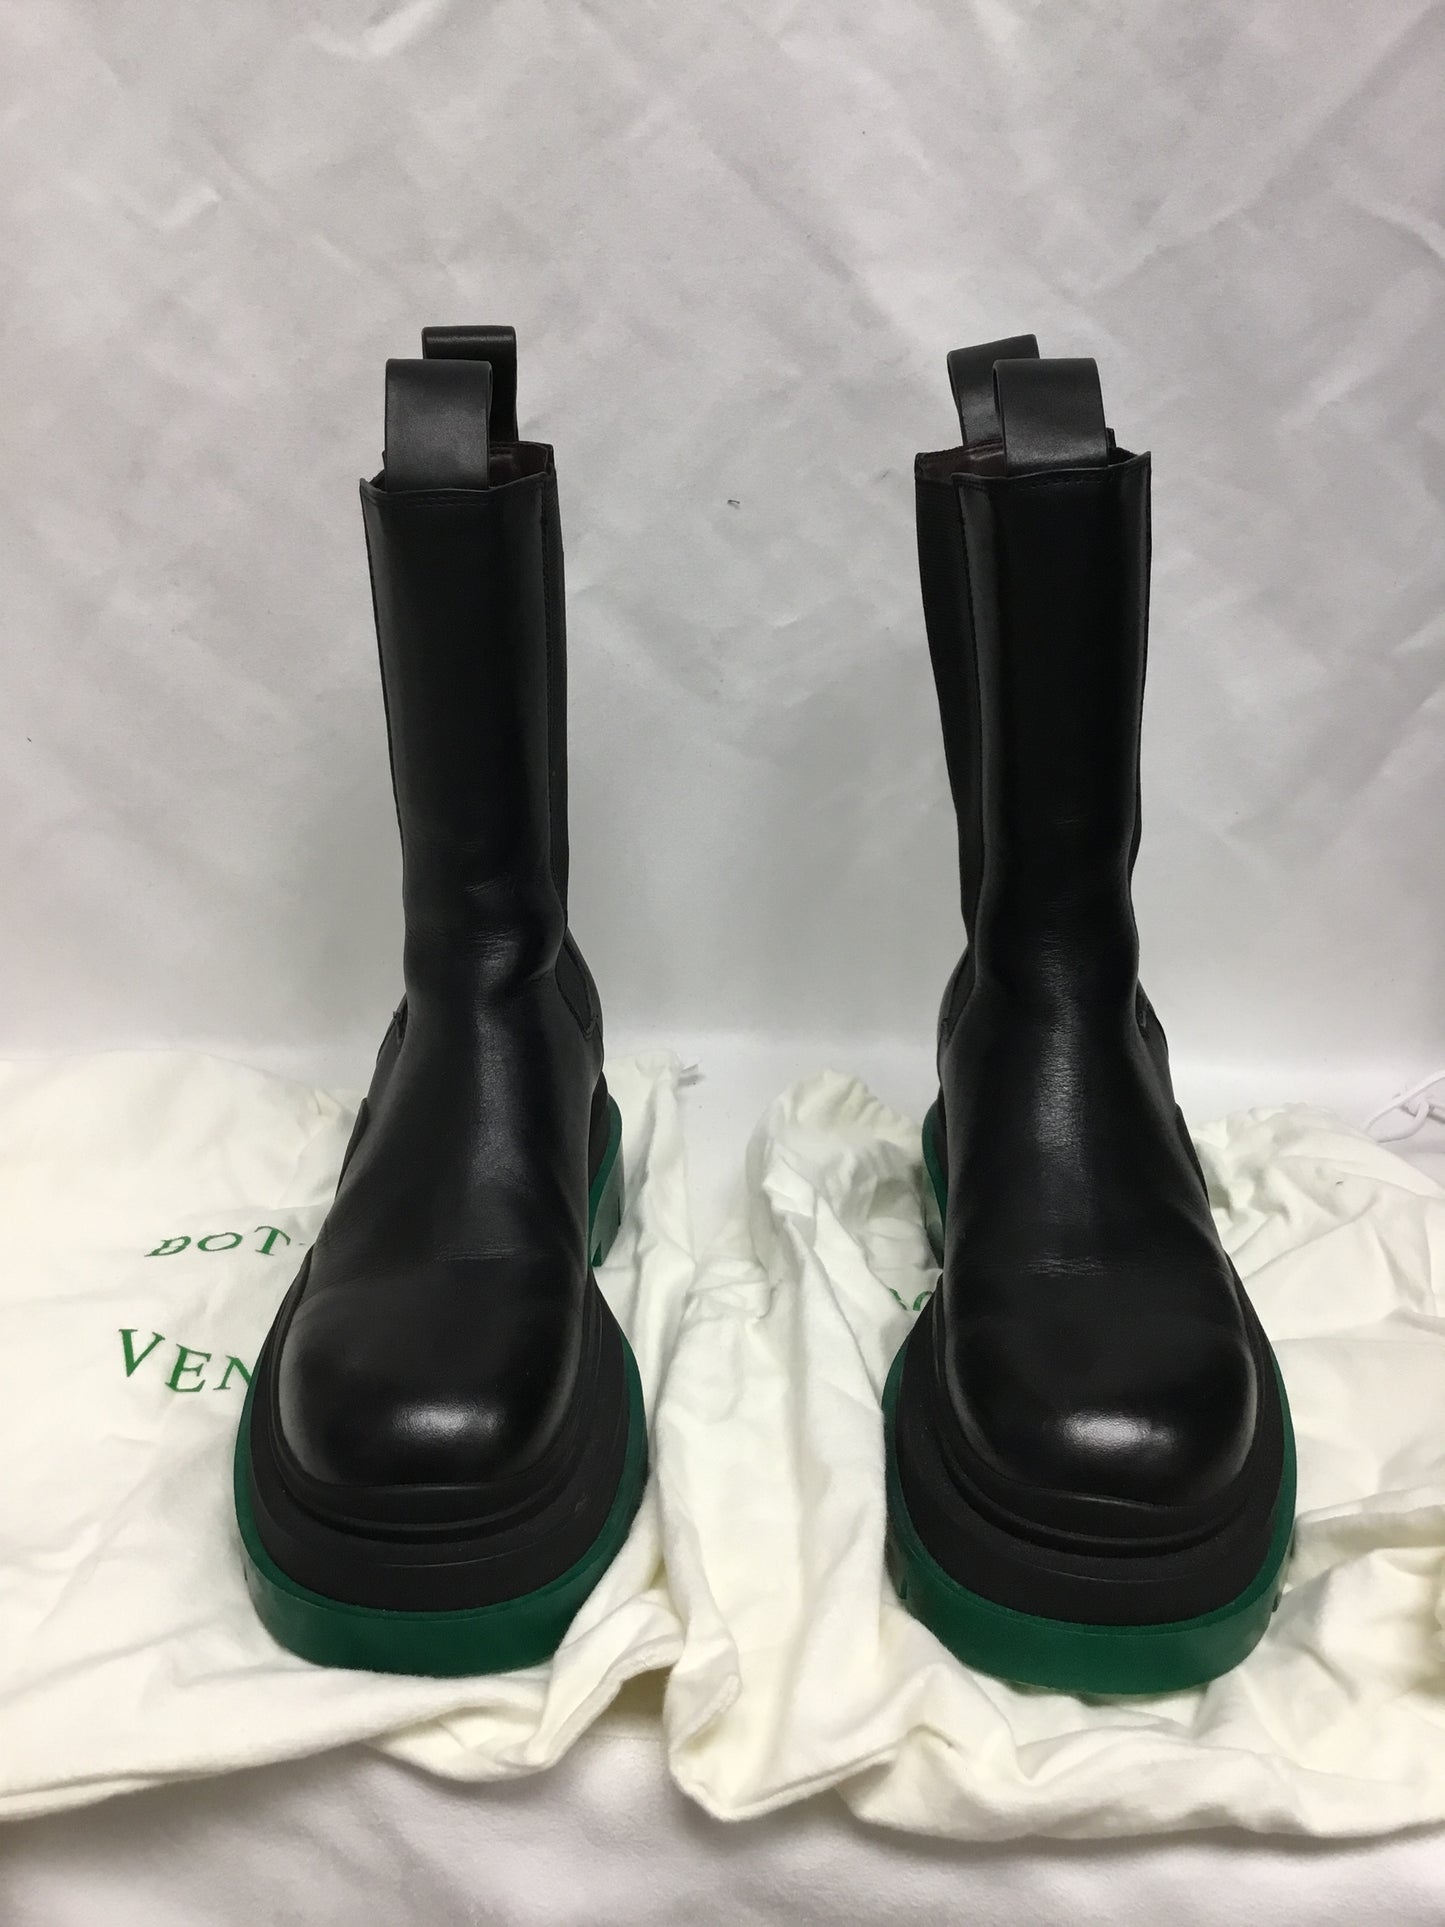 Bottega Veneta Black Leather with Green Rubber Sole Boots